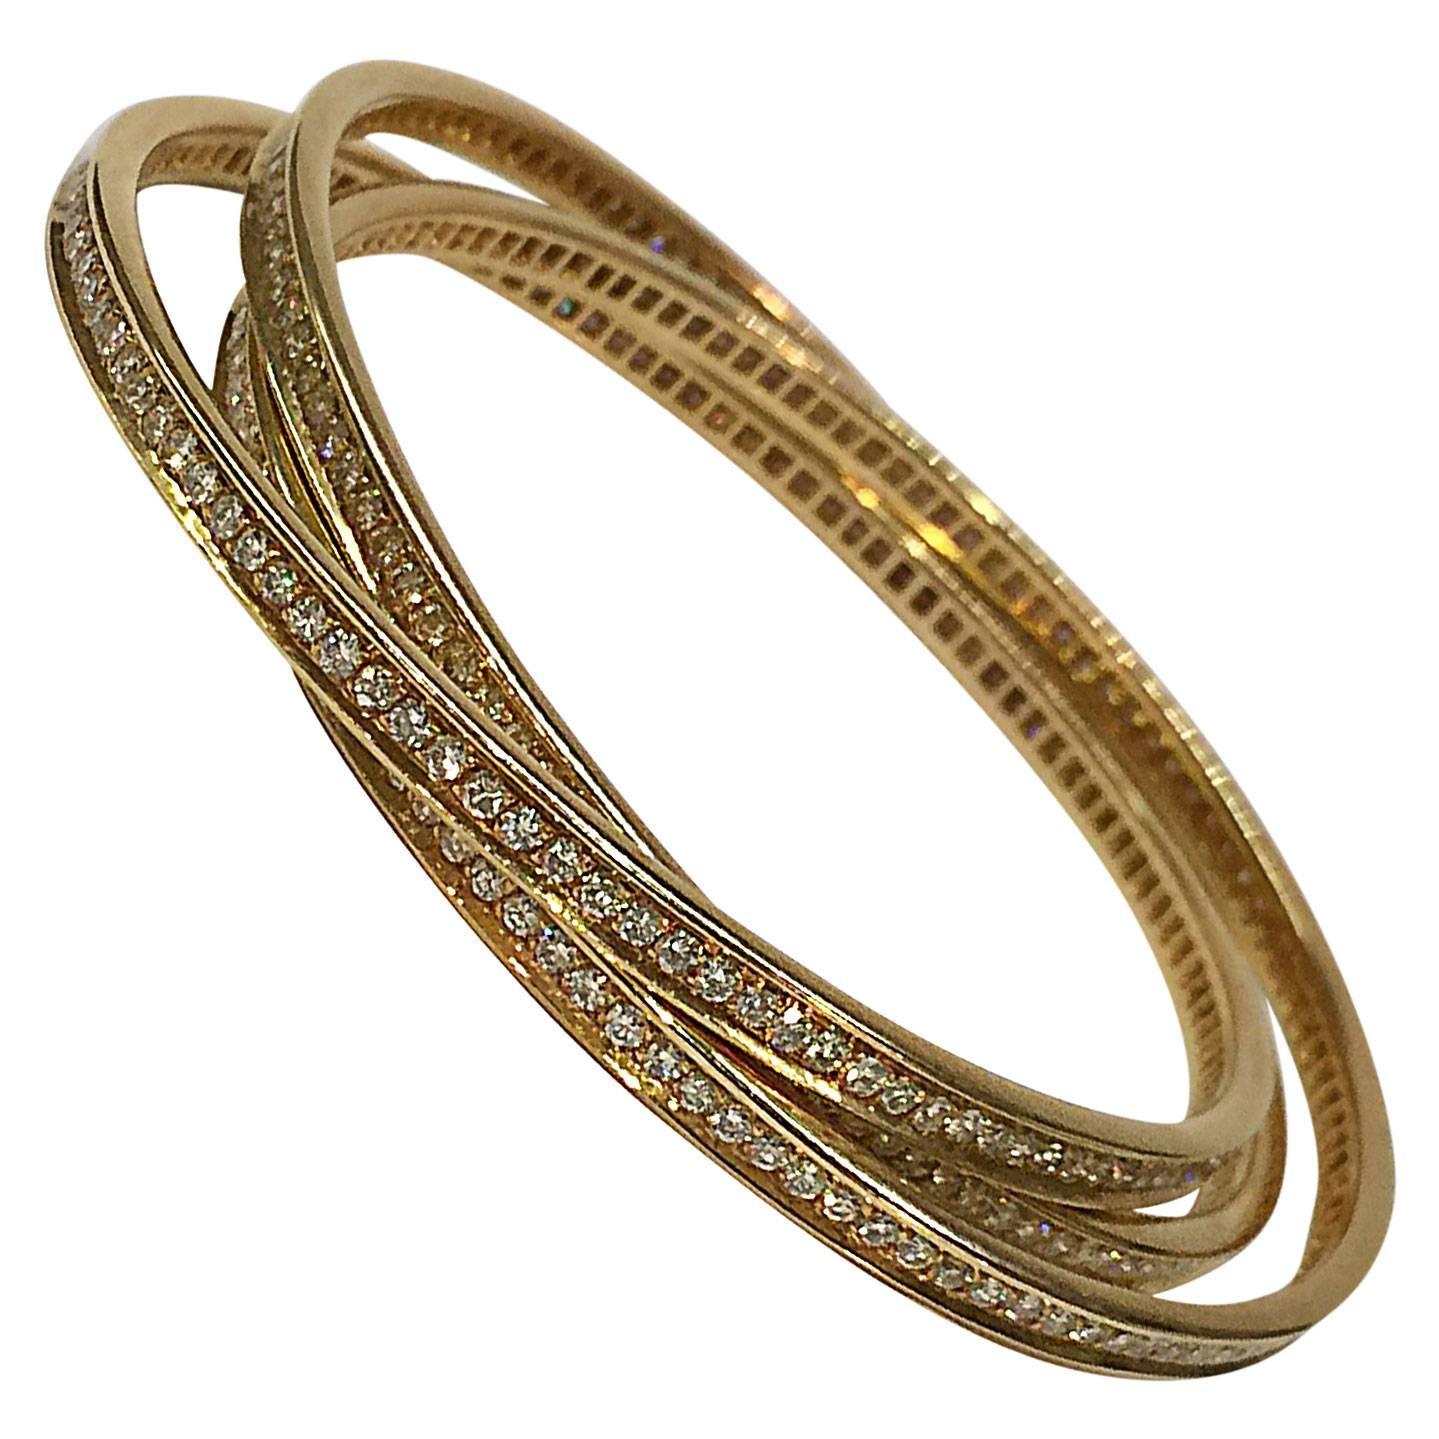  Cartier  Trinity Diamond  Gold Bracelet  For Sale at 1stdibs